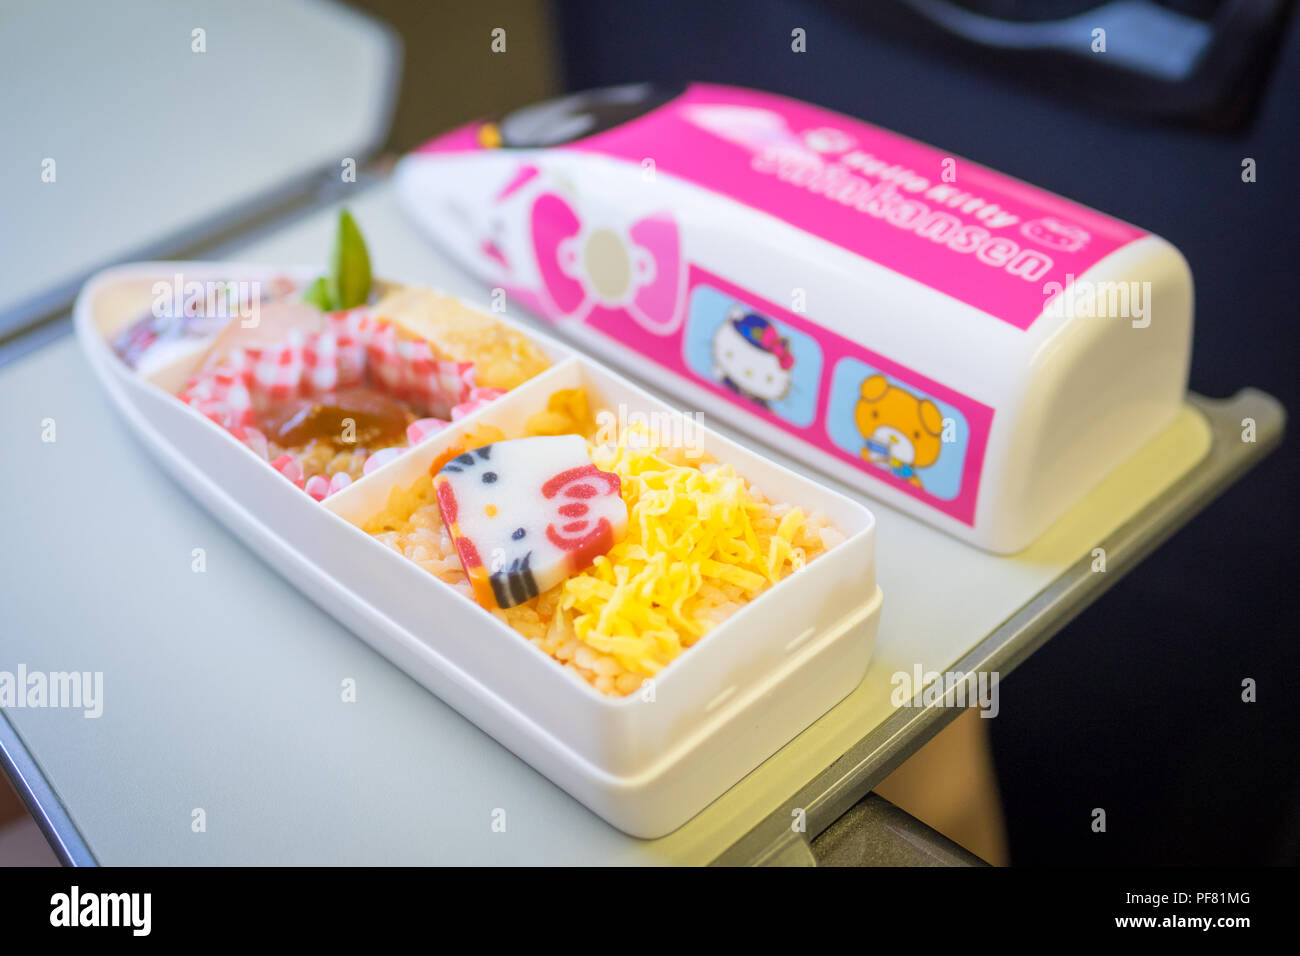 https://c8.alamy.com/comp/PF81MG/special-hello-kitty-ekiben-train-bento-hello-kitty-bento-box-lunch-aboard-the-hello-kitty-shinkansen-hello-kitty-bullet-train-okayama-japan-PF81MG.jpg